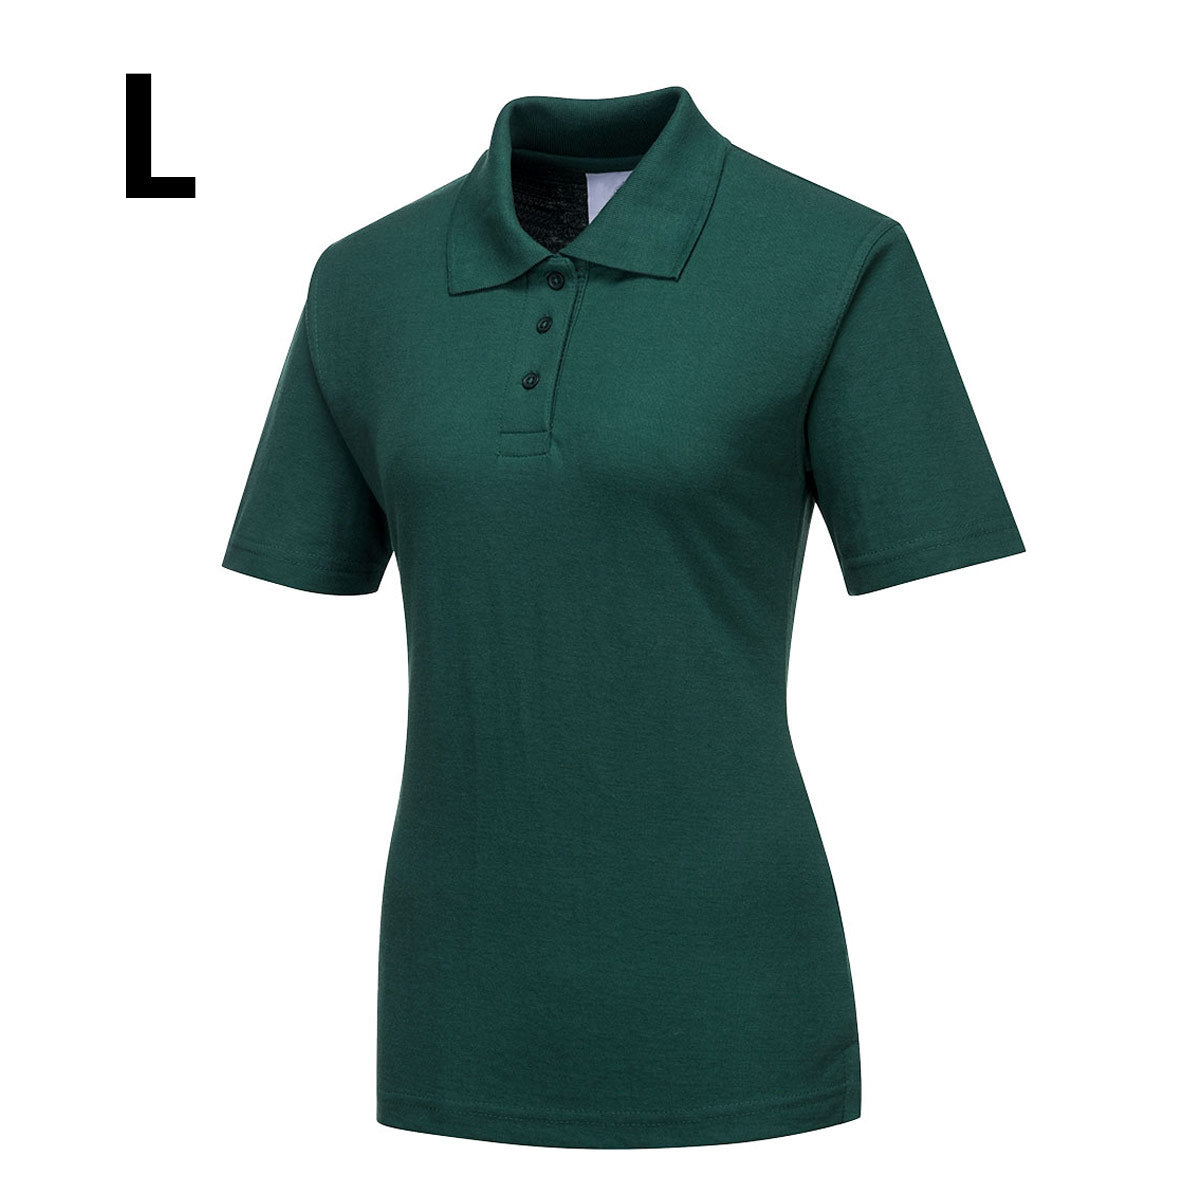 Poloshirt til damer - Flaske grøn - Størrelse: L